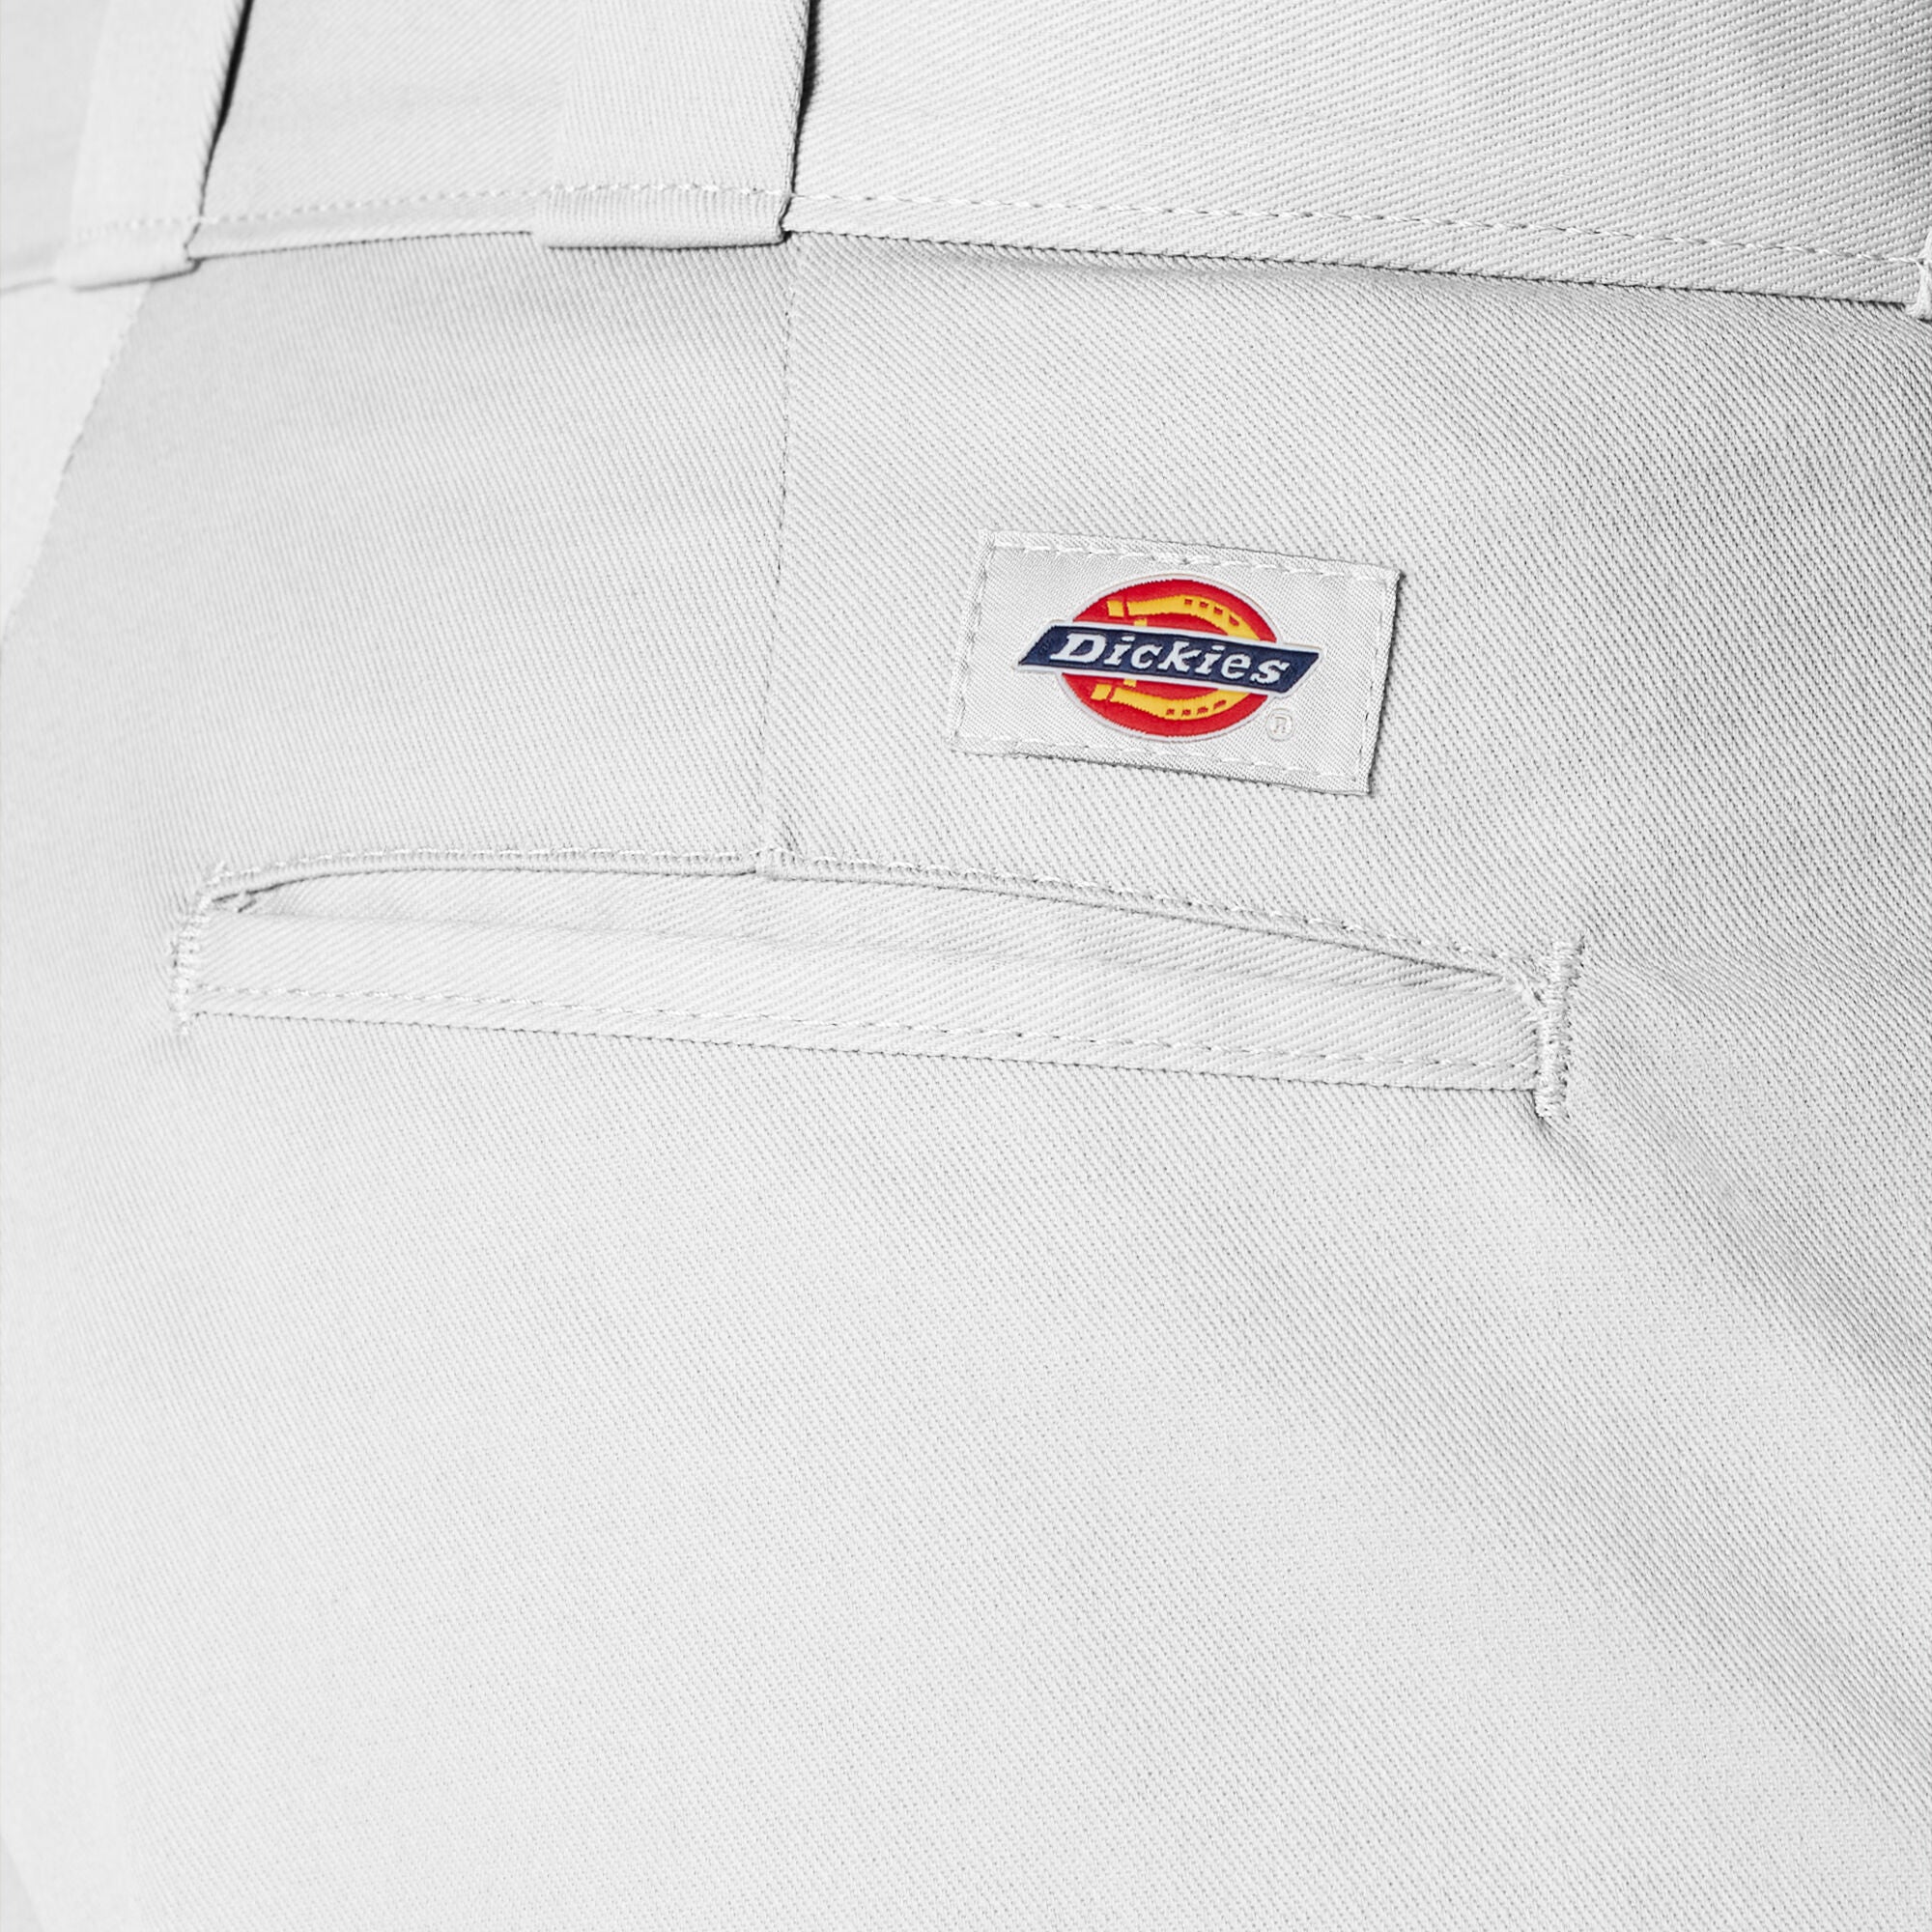 Dickies Original 874 Work Pants, White